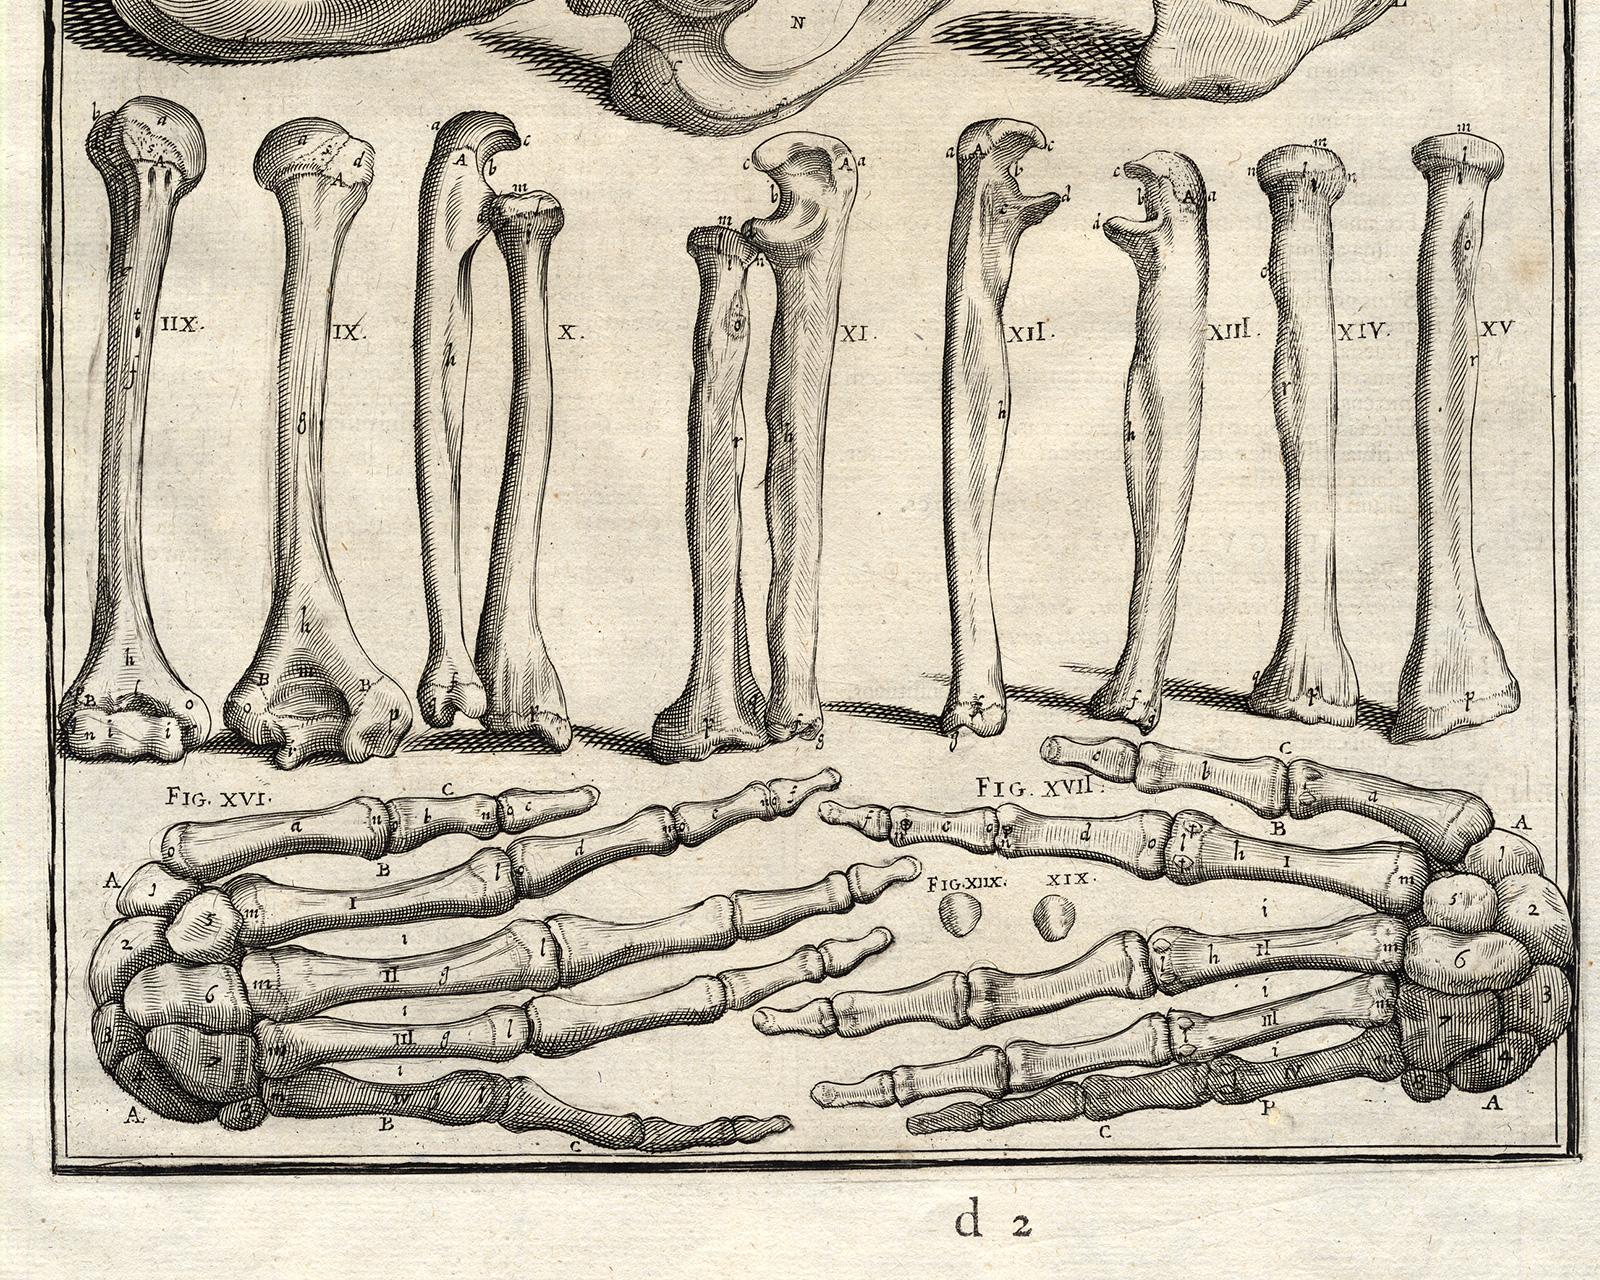 Anatomical print - bones of hands, arms, etc - by Spigelius - Engraving - 17th c - Beige Print by Adrianus Spigelius